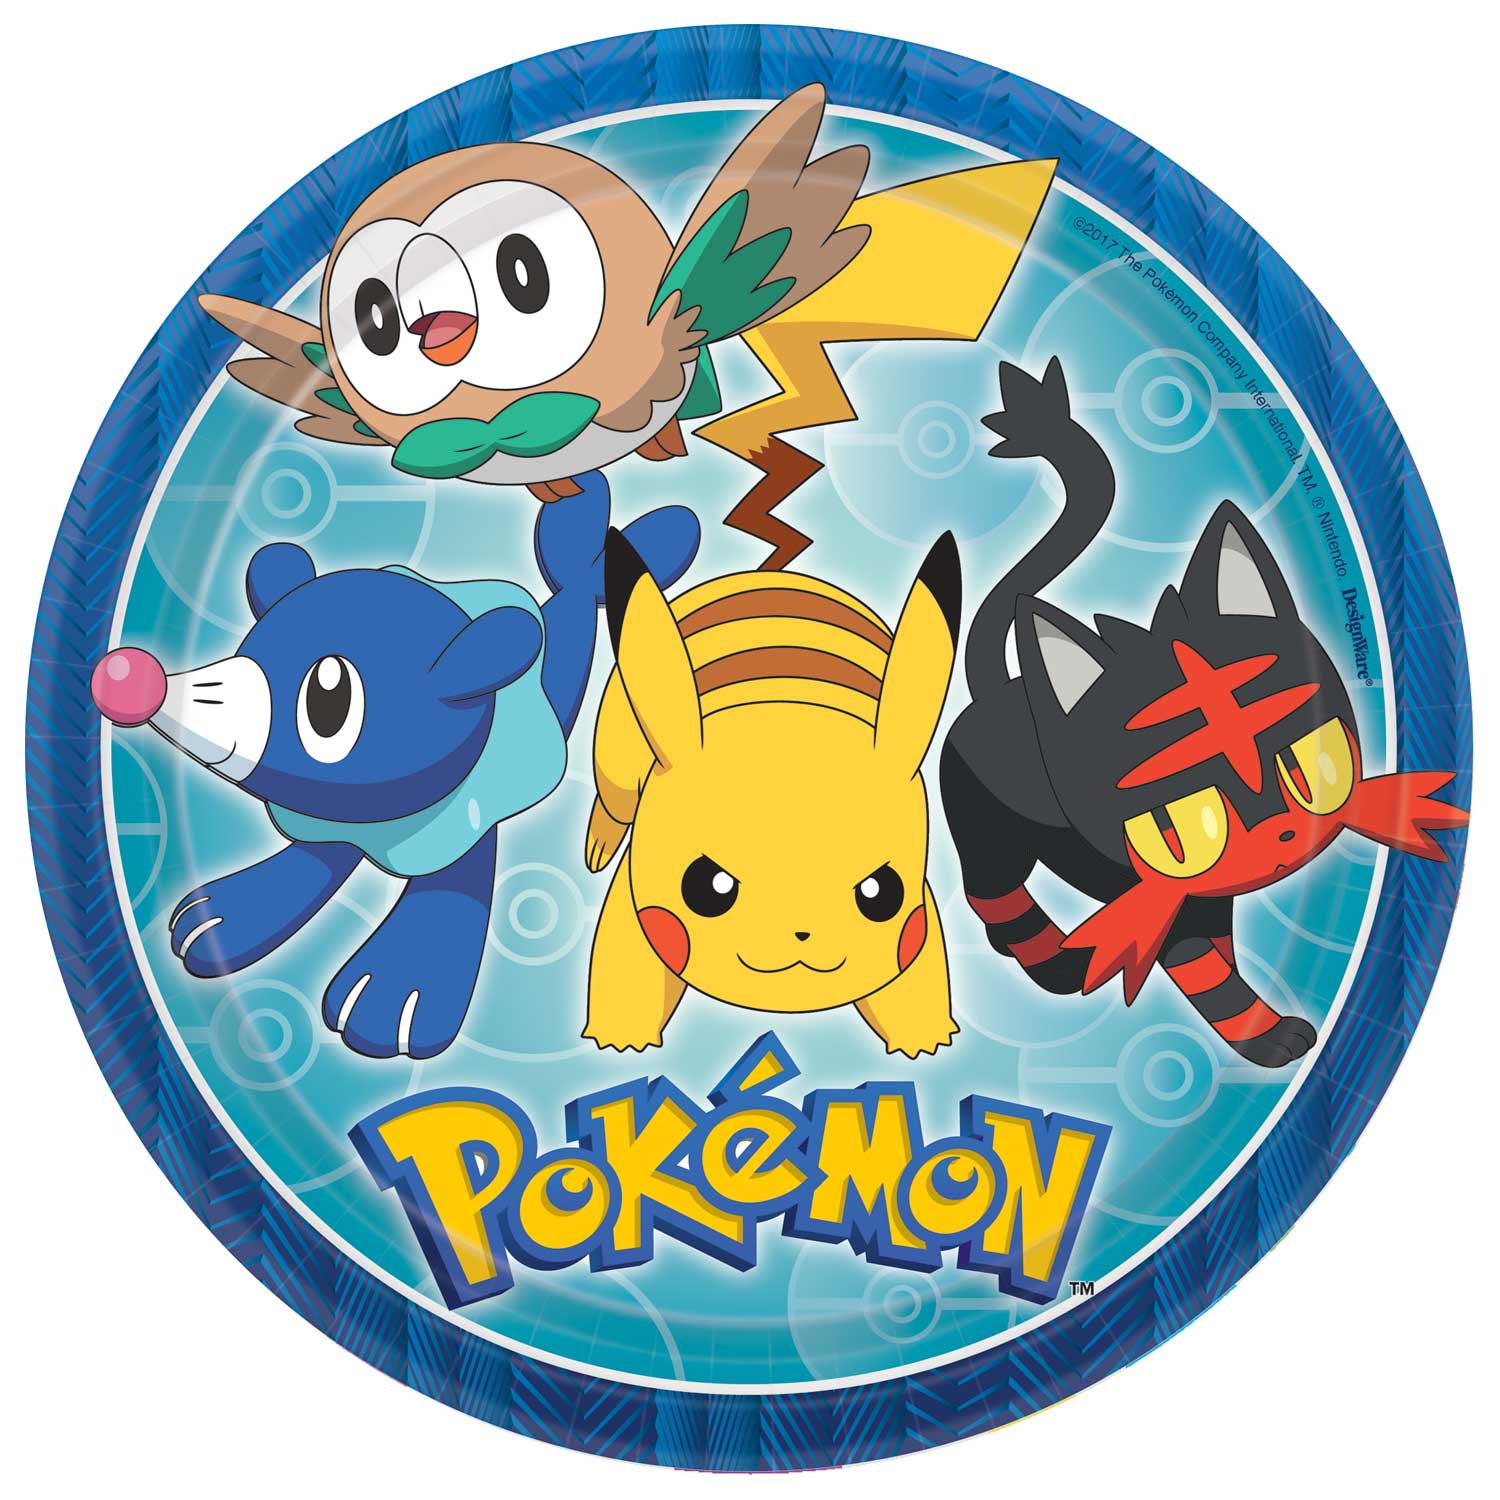 Pokémon Paper Plates 23cm - 6 PKG/8 : Amscan International